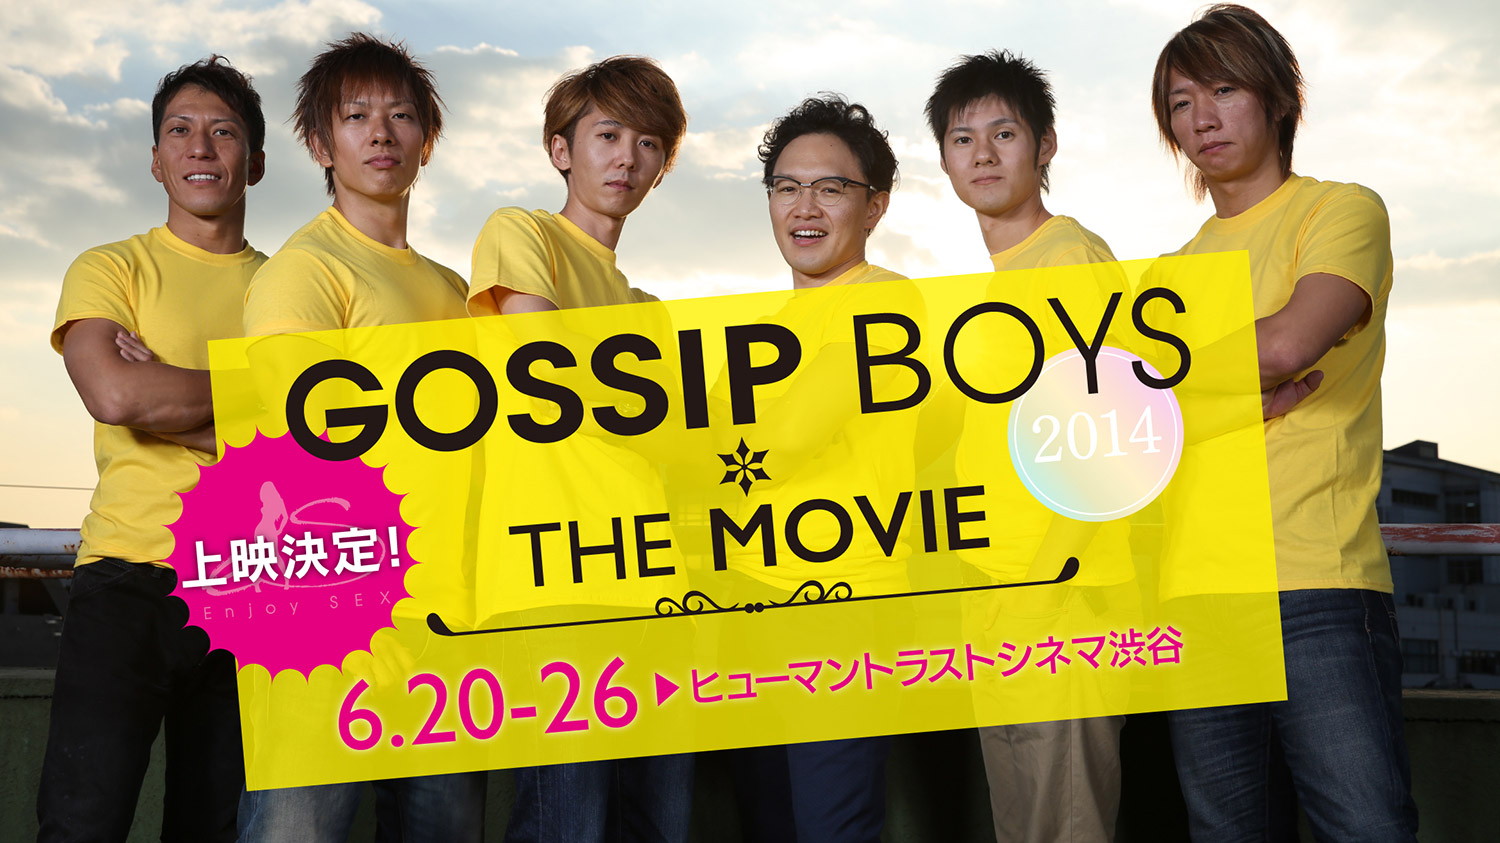 『GOSSIP BOYS 2014 THE MOVIE』公開情報